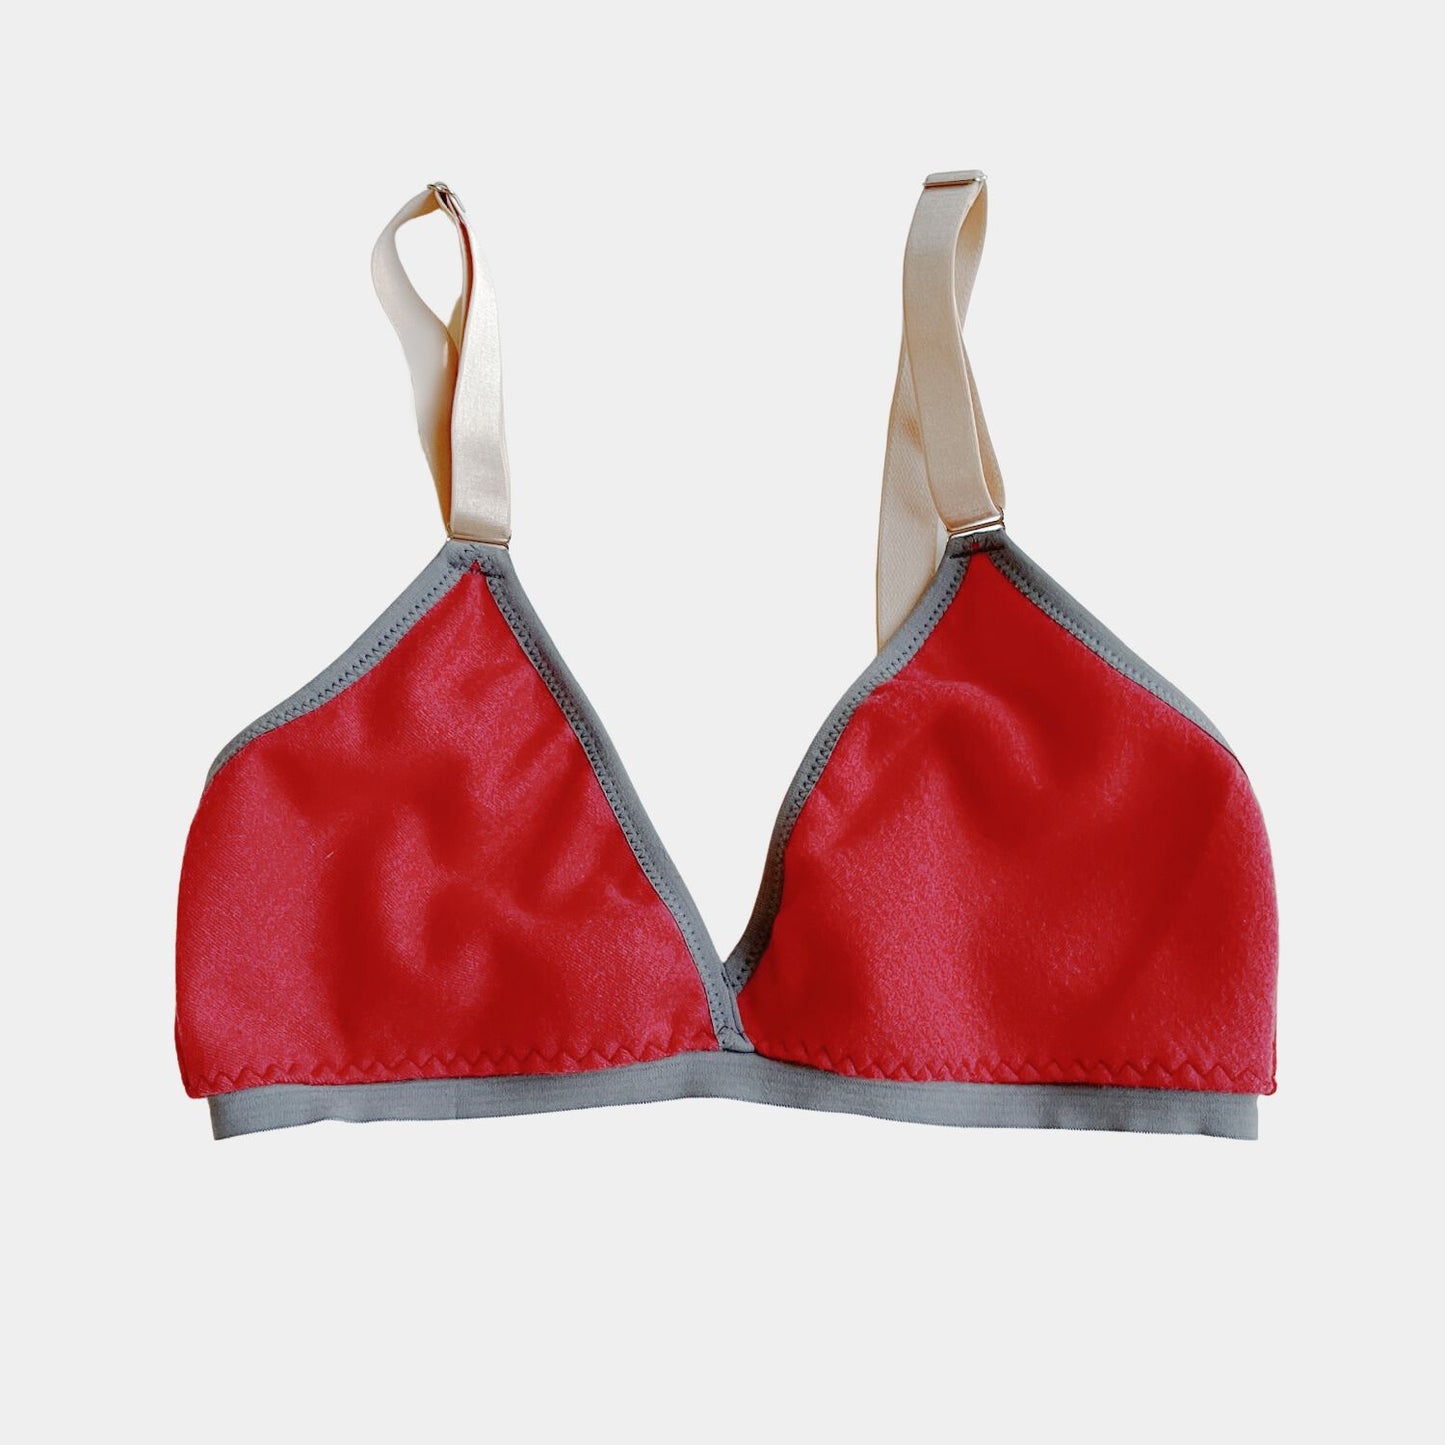 Natural Merino wool bras women's | Shop Wool bra tops underwear from Canada